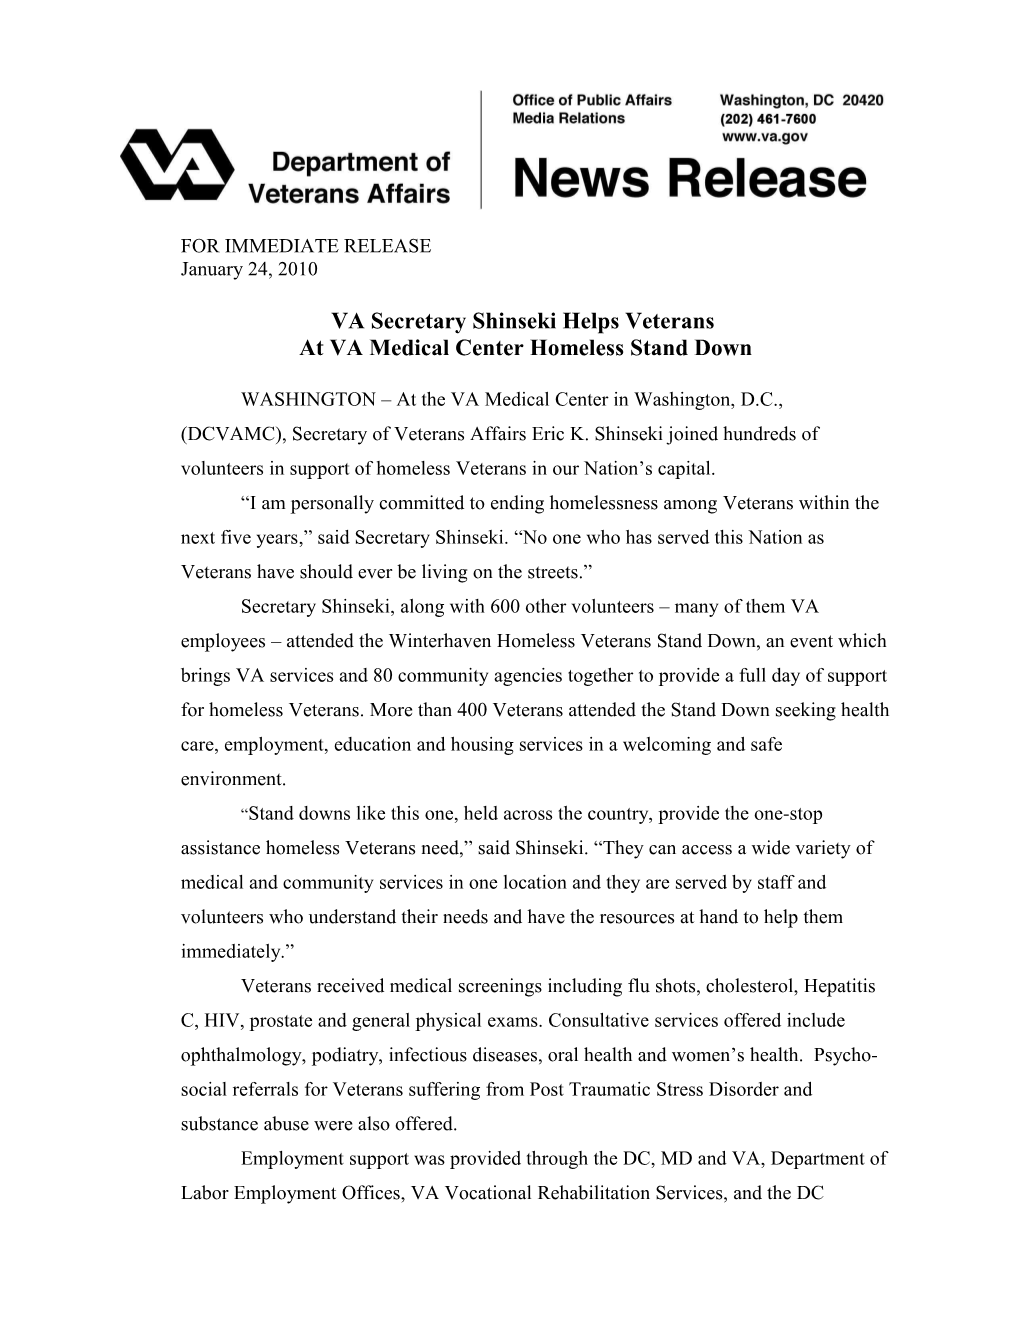 VA Secretary Shinseki Helps Veterans